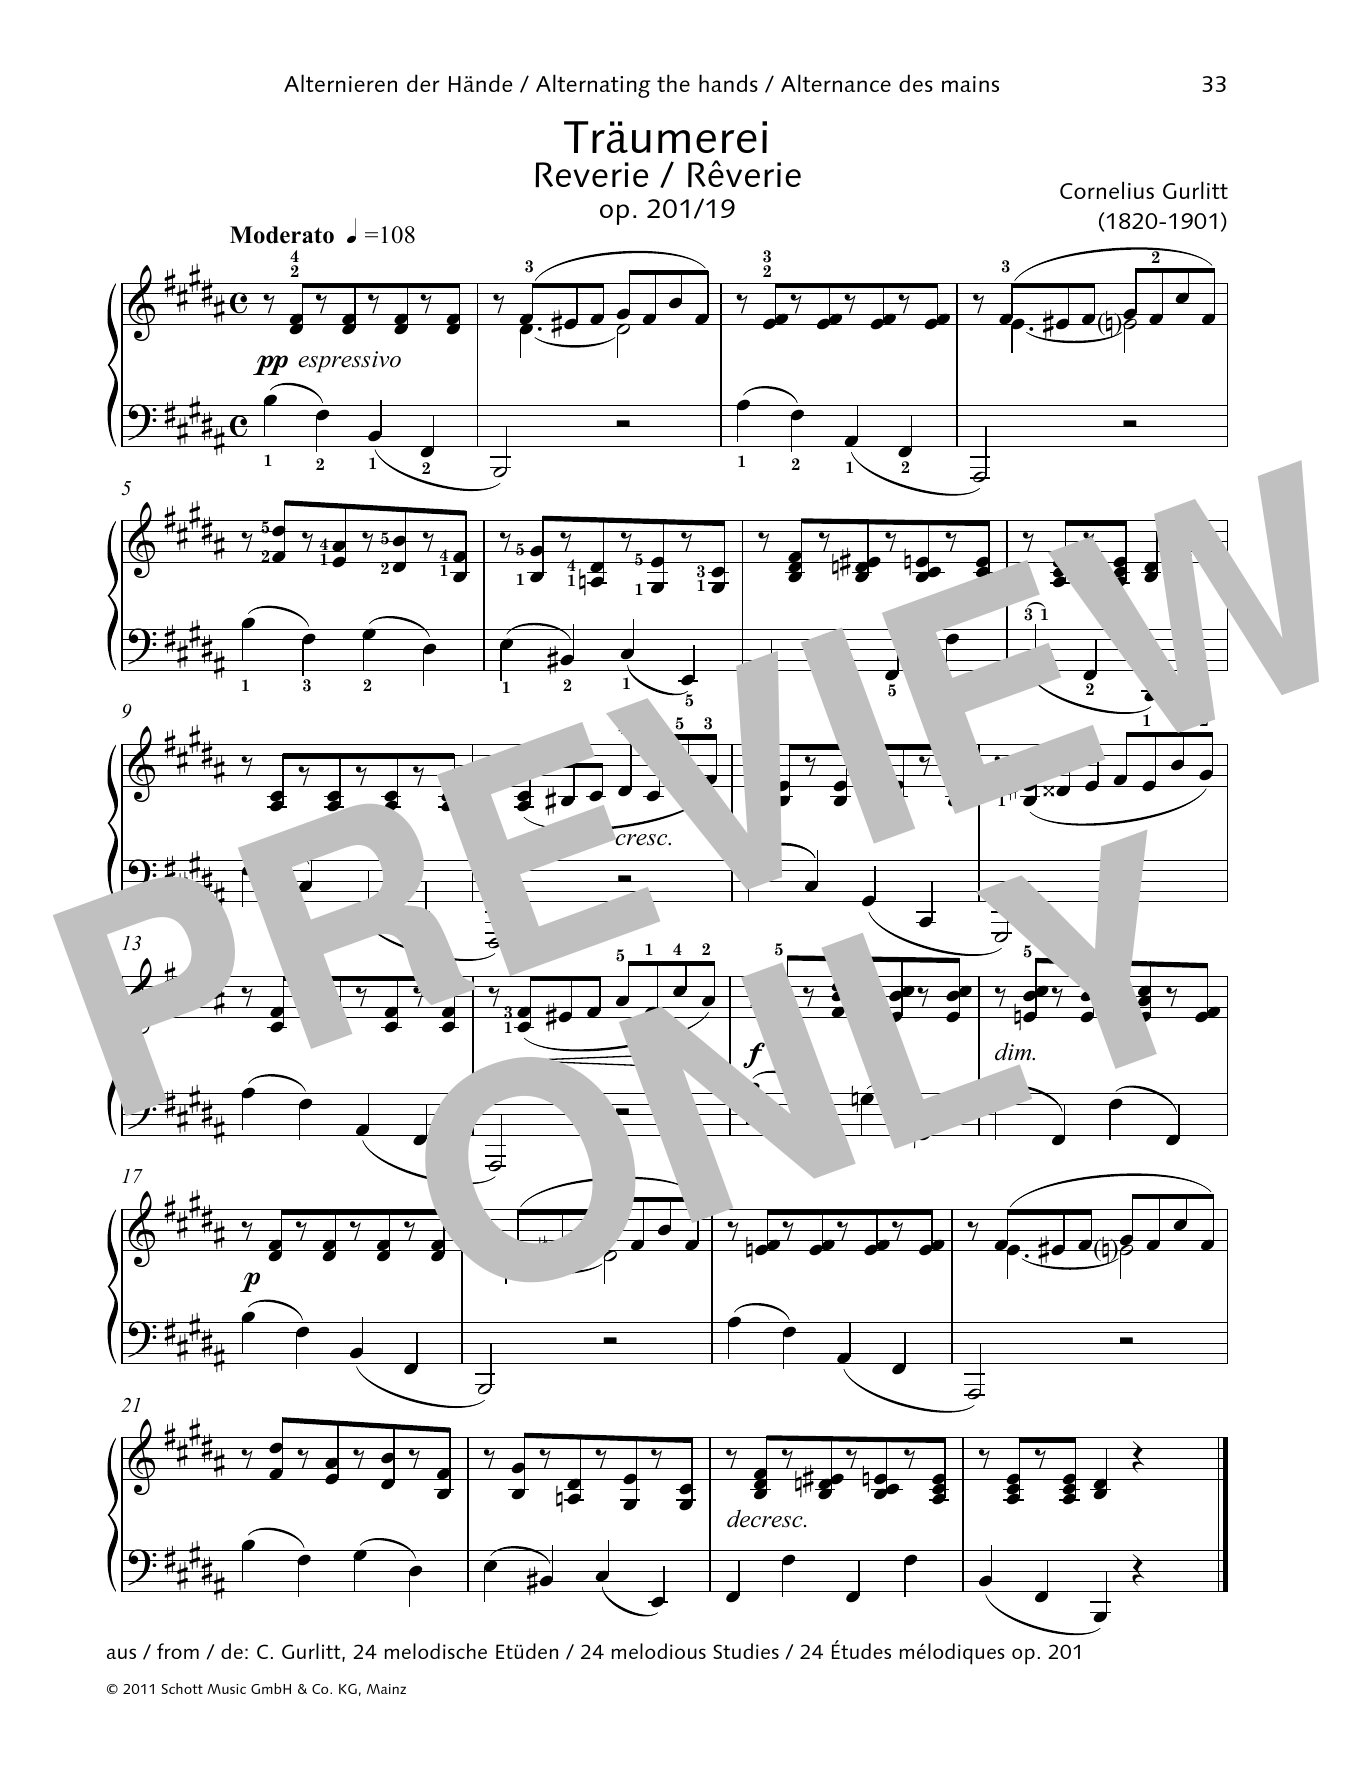 Cornelius Gurlitt Reverie Sheet Music Notes & Chords for Piano Solo - Download or Print PDF